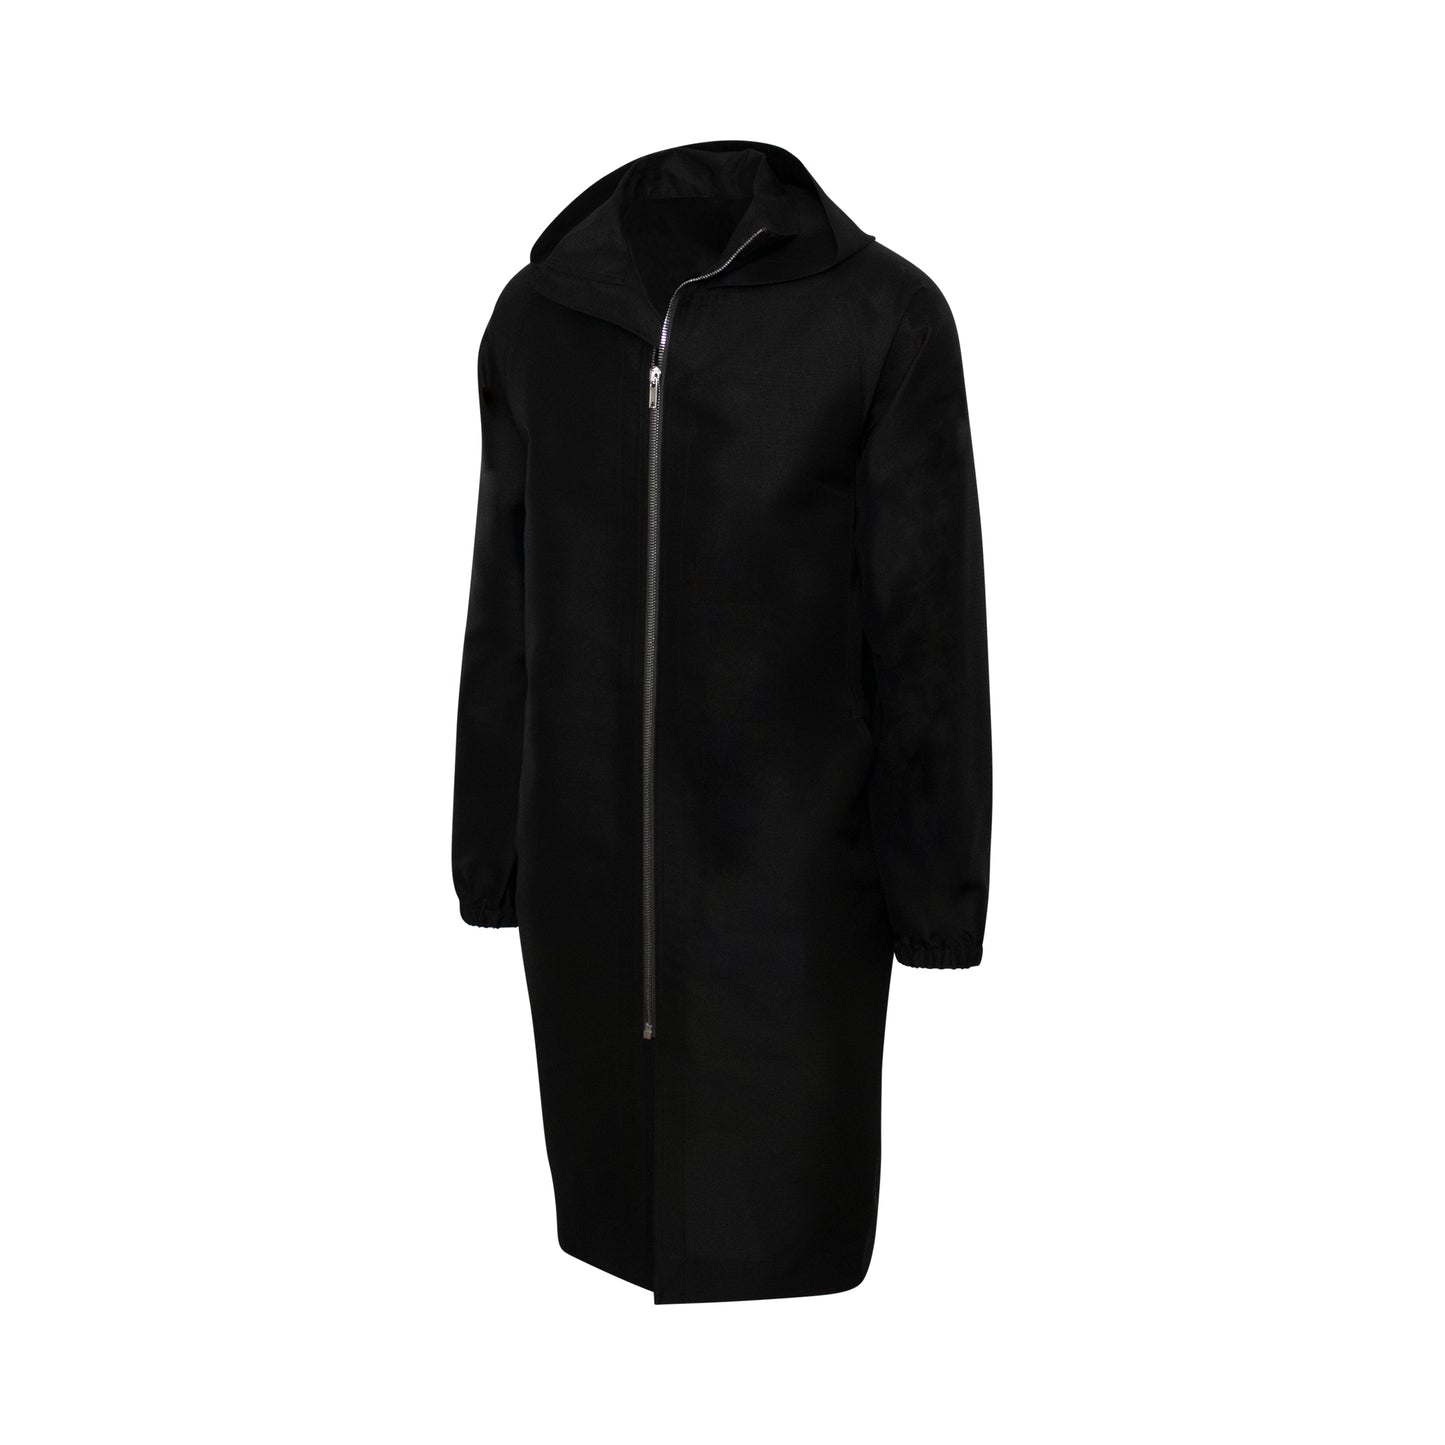 Windpea Coat in Black